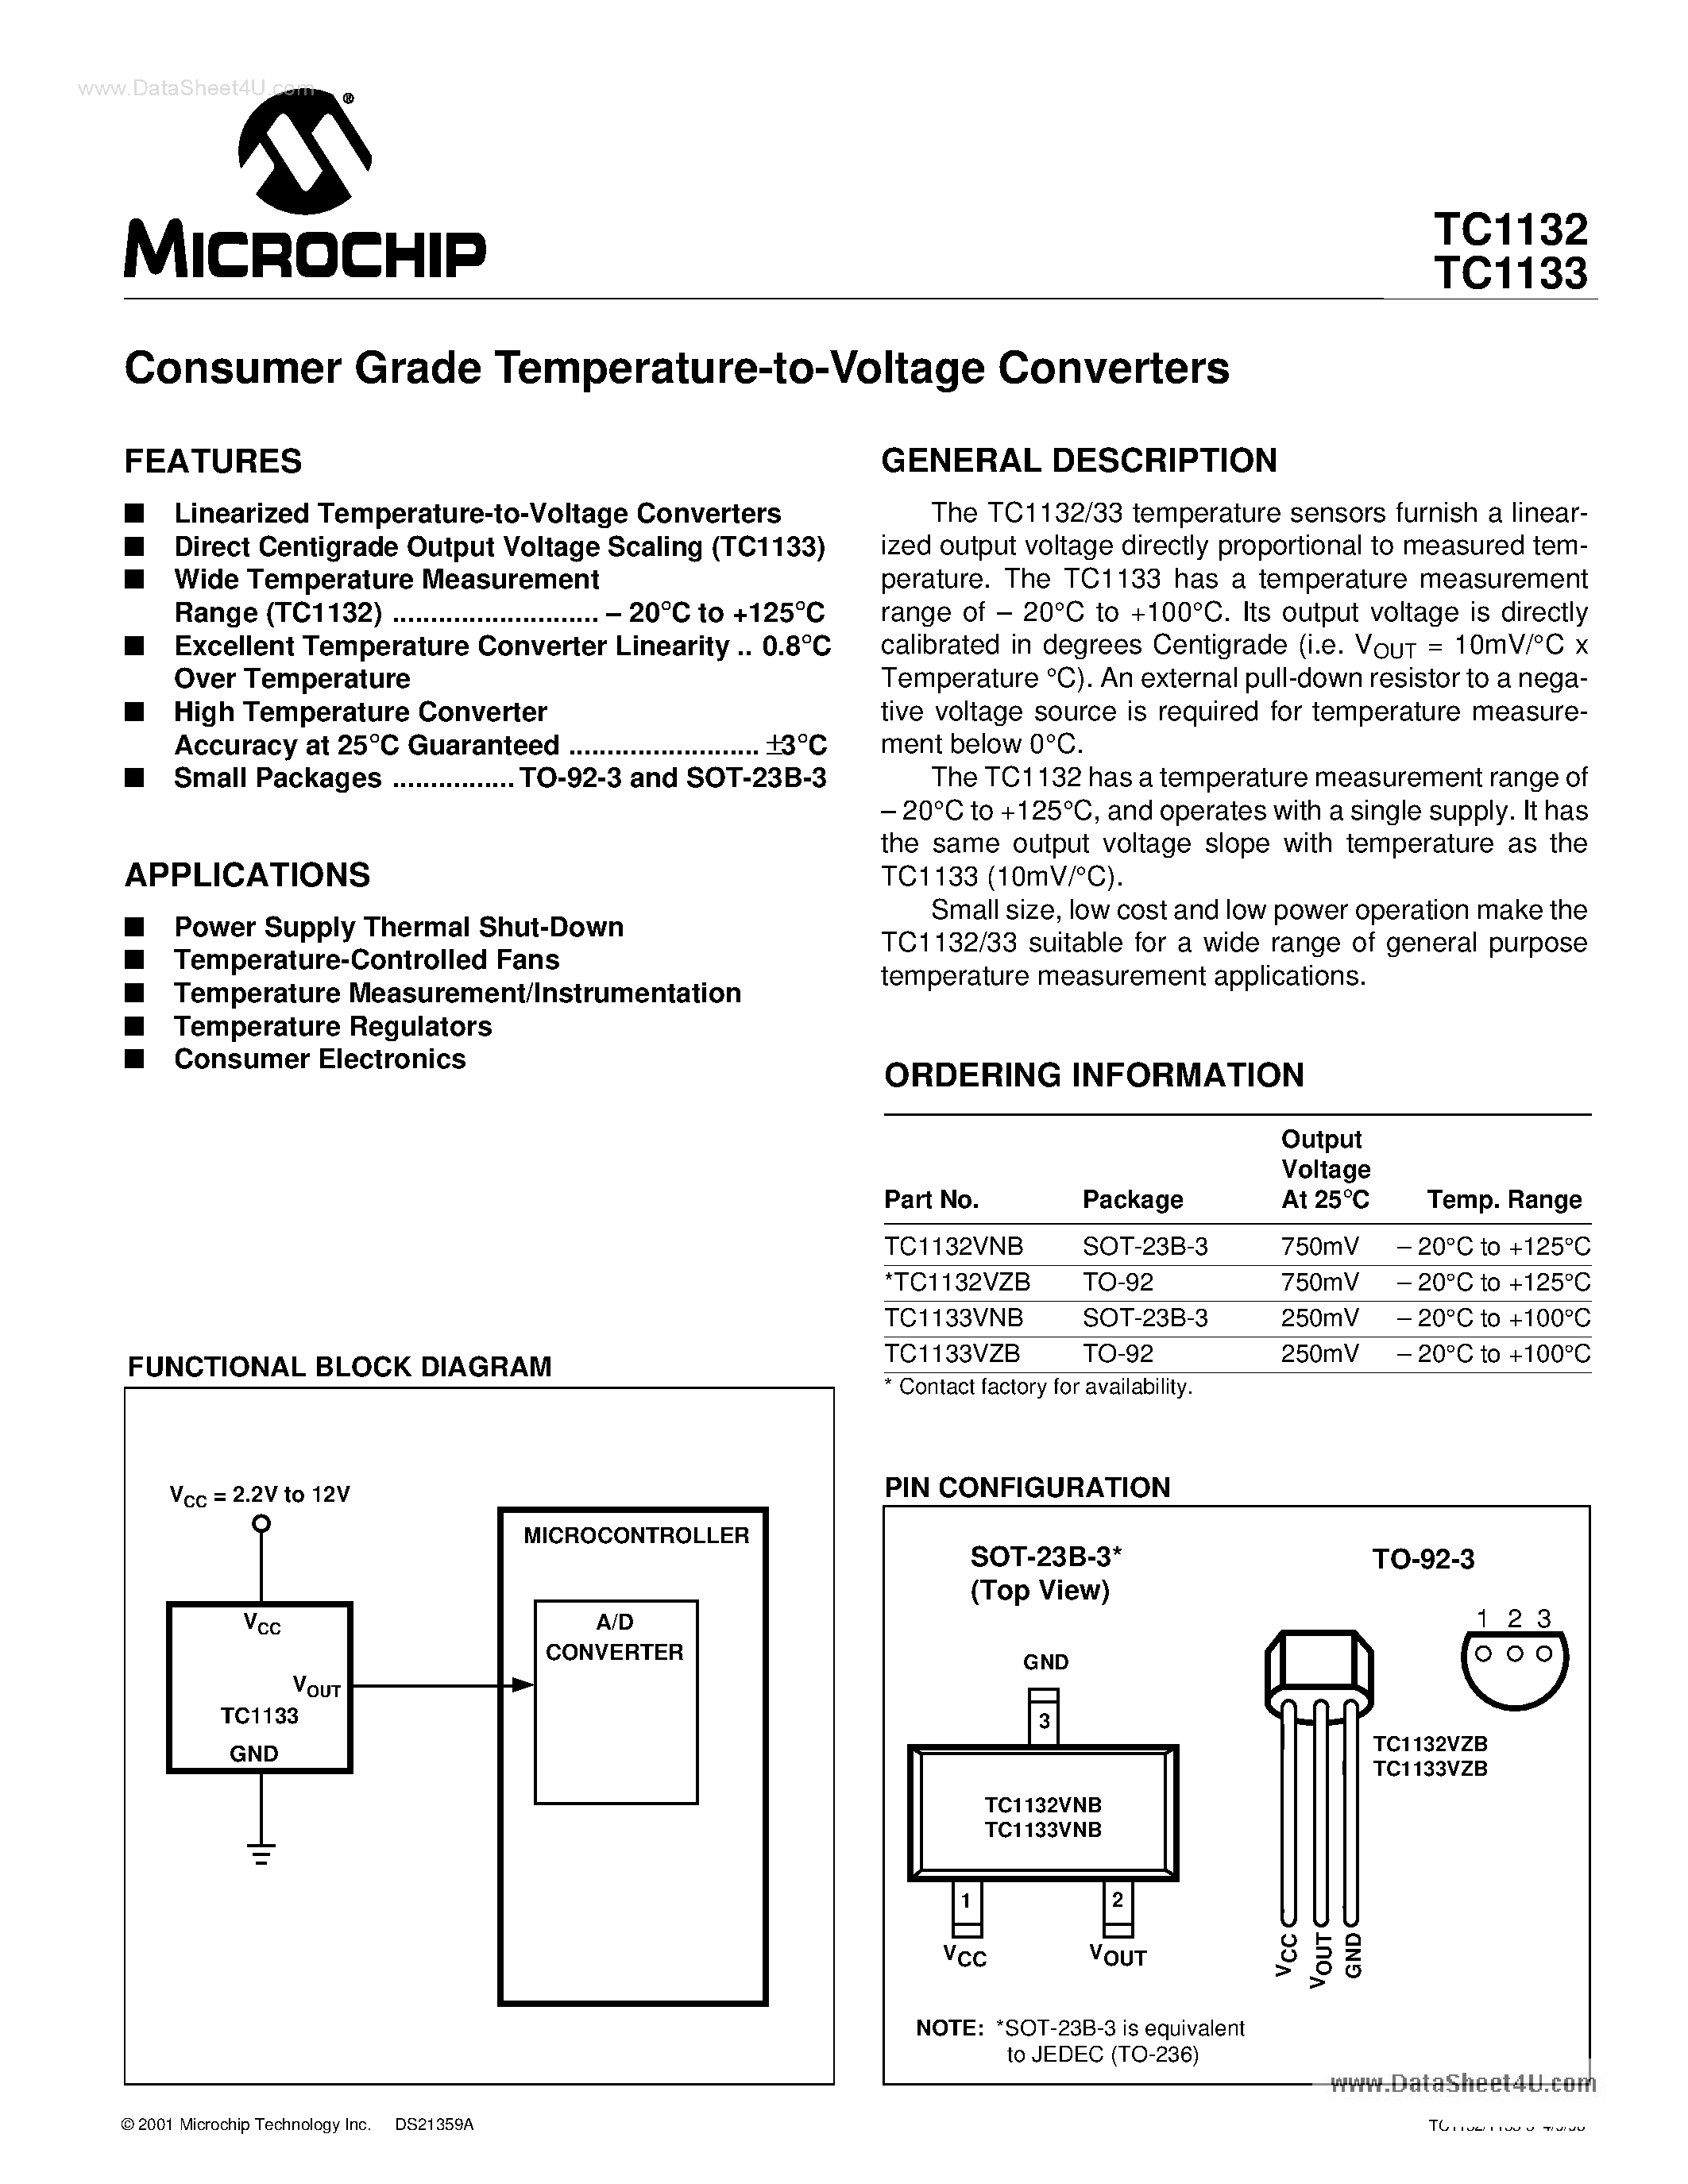 Даташит TC1132 - (TC1132 / TC1133) Consumer Grade Temperature to Voltage Converters страница 1